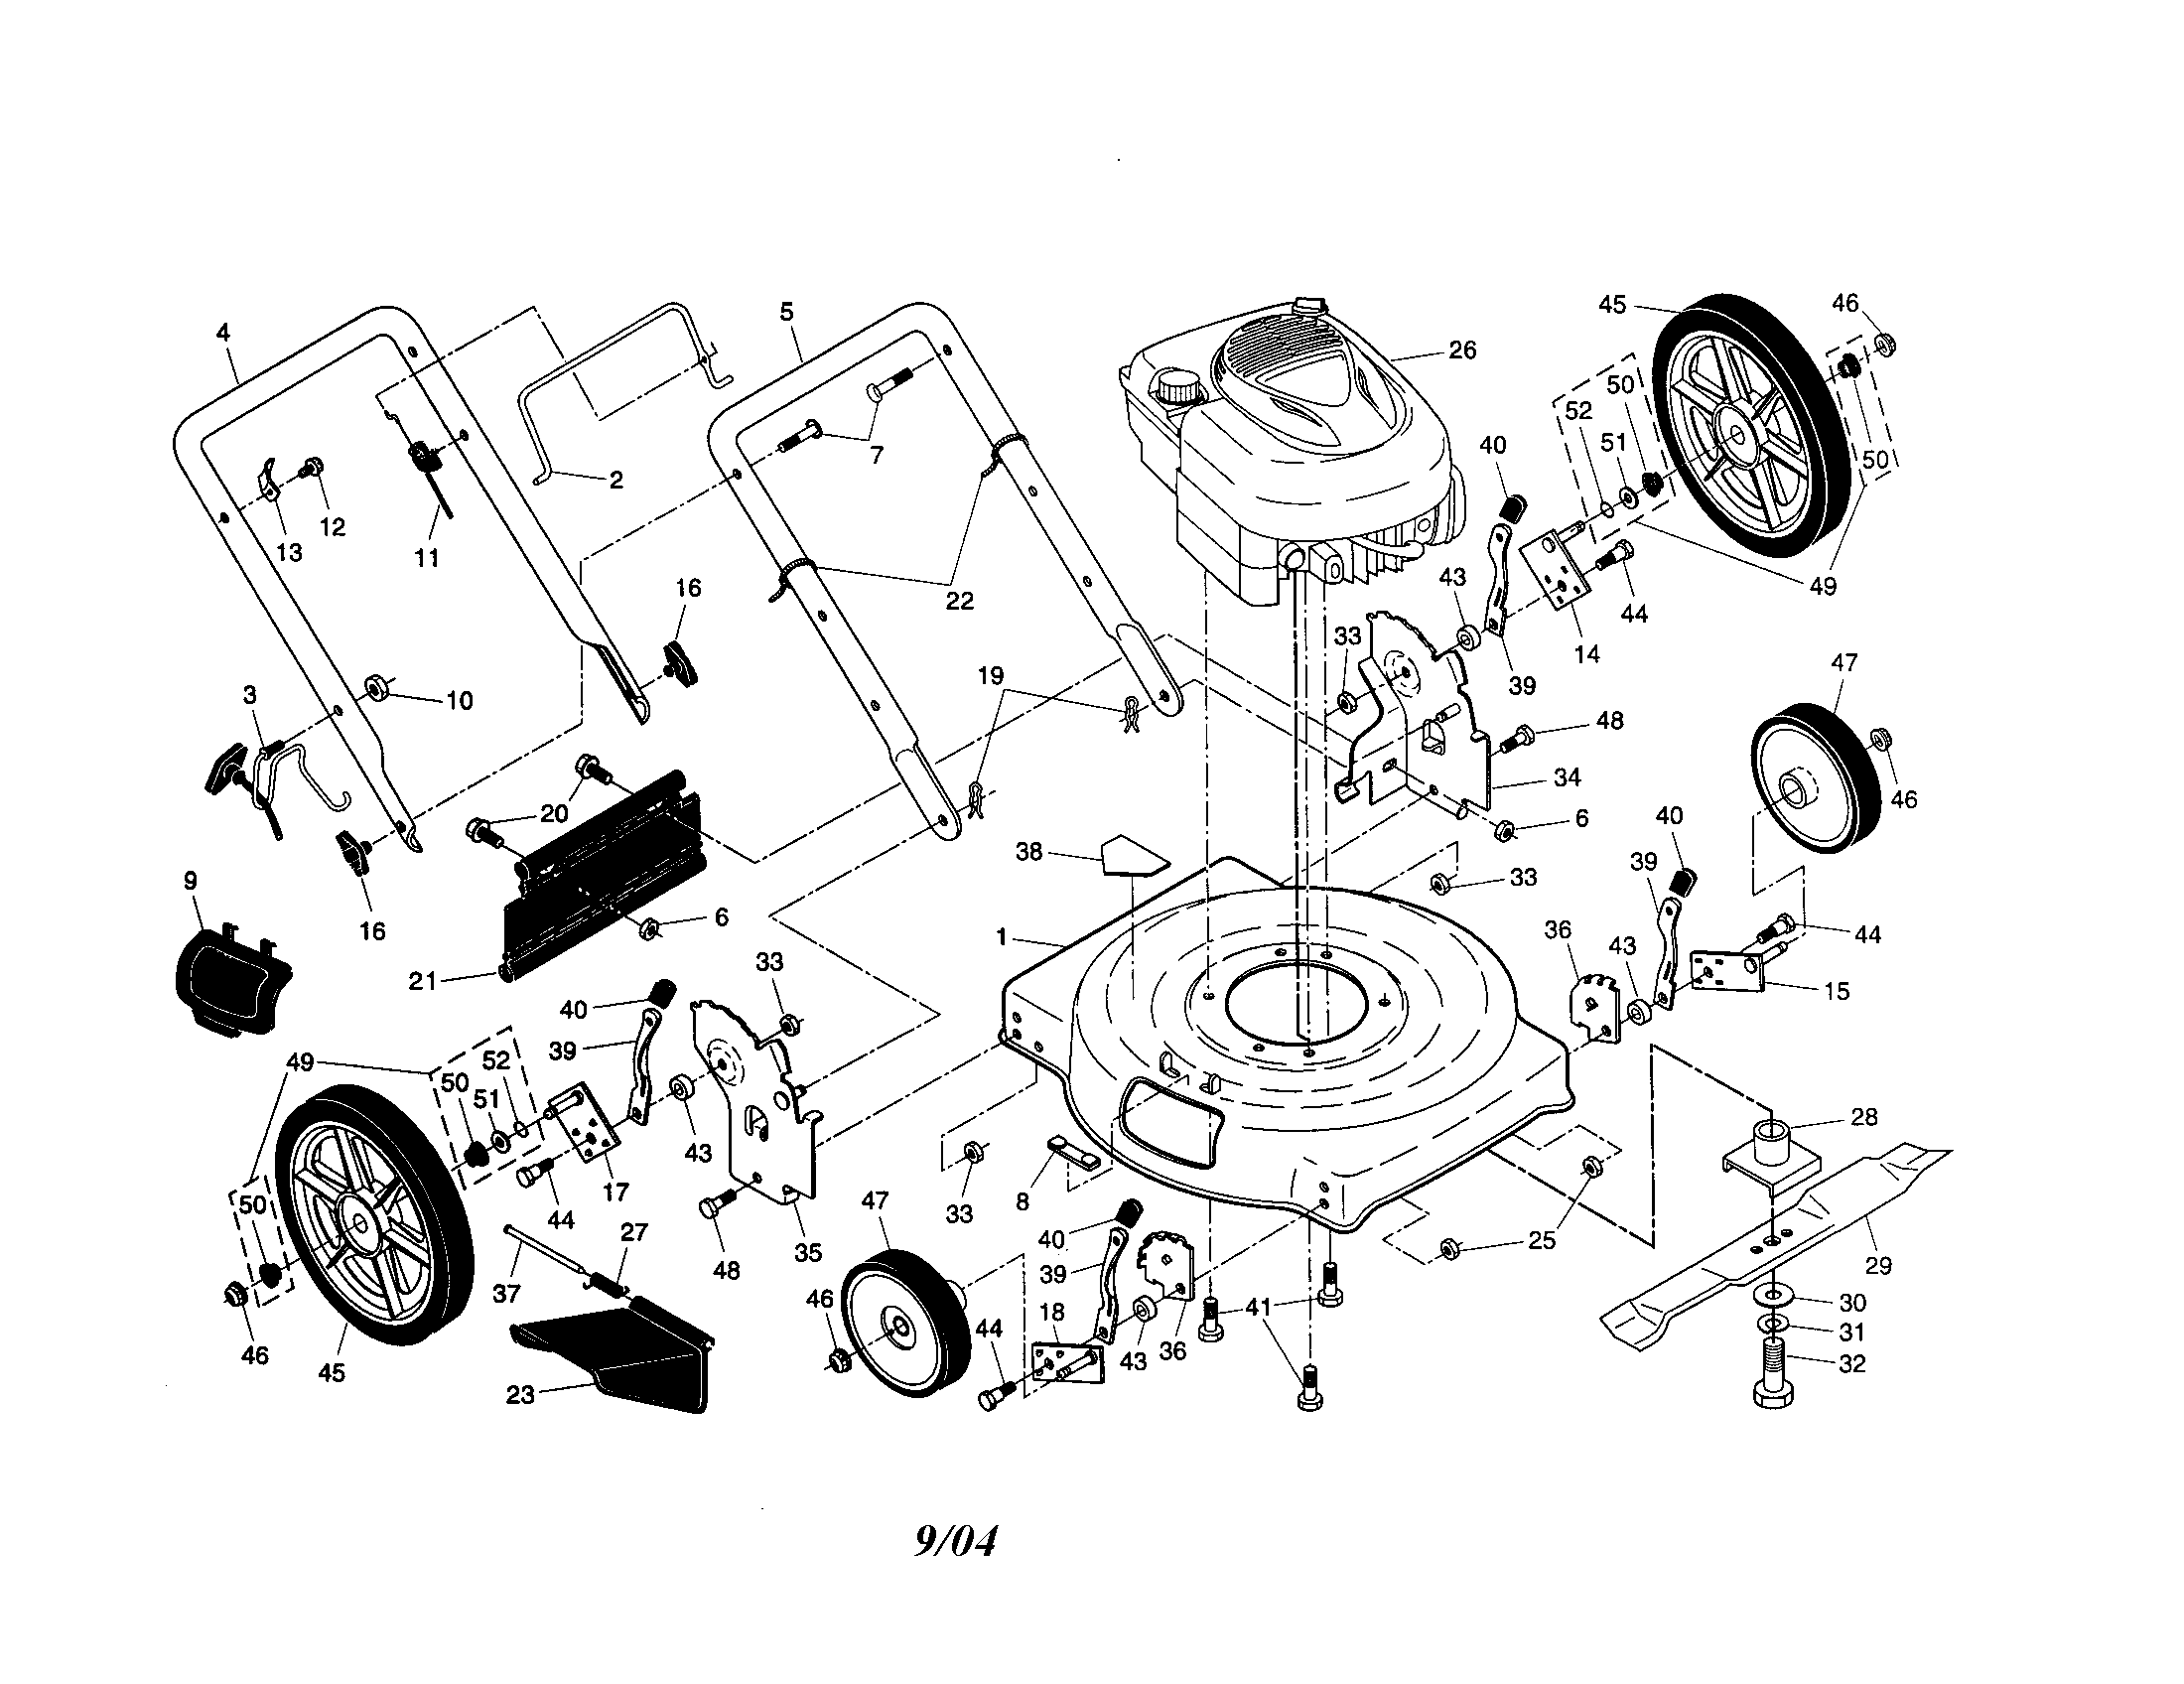 Wiring Diagram For A Craftsman Lawn Mower